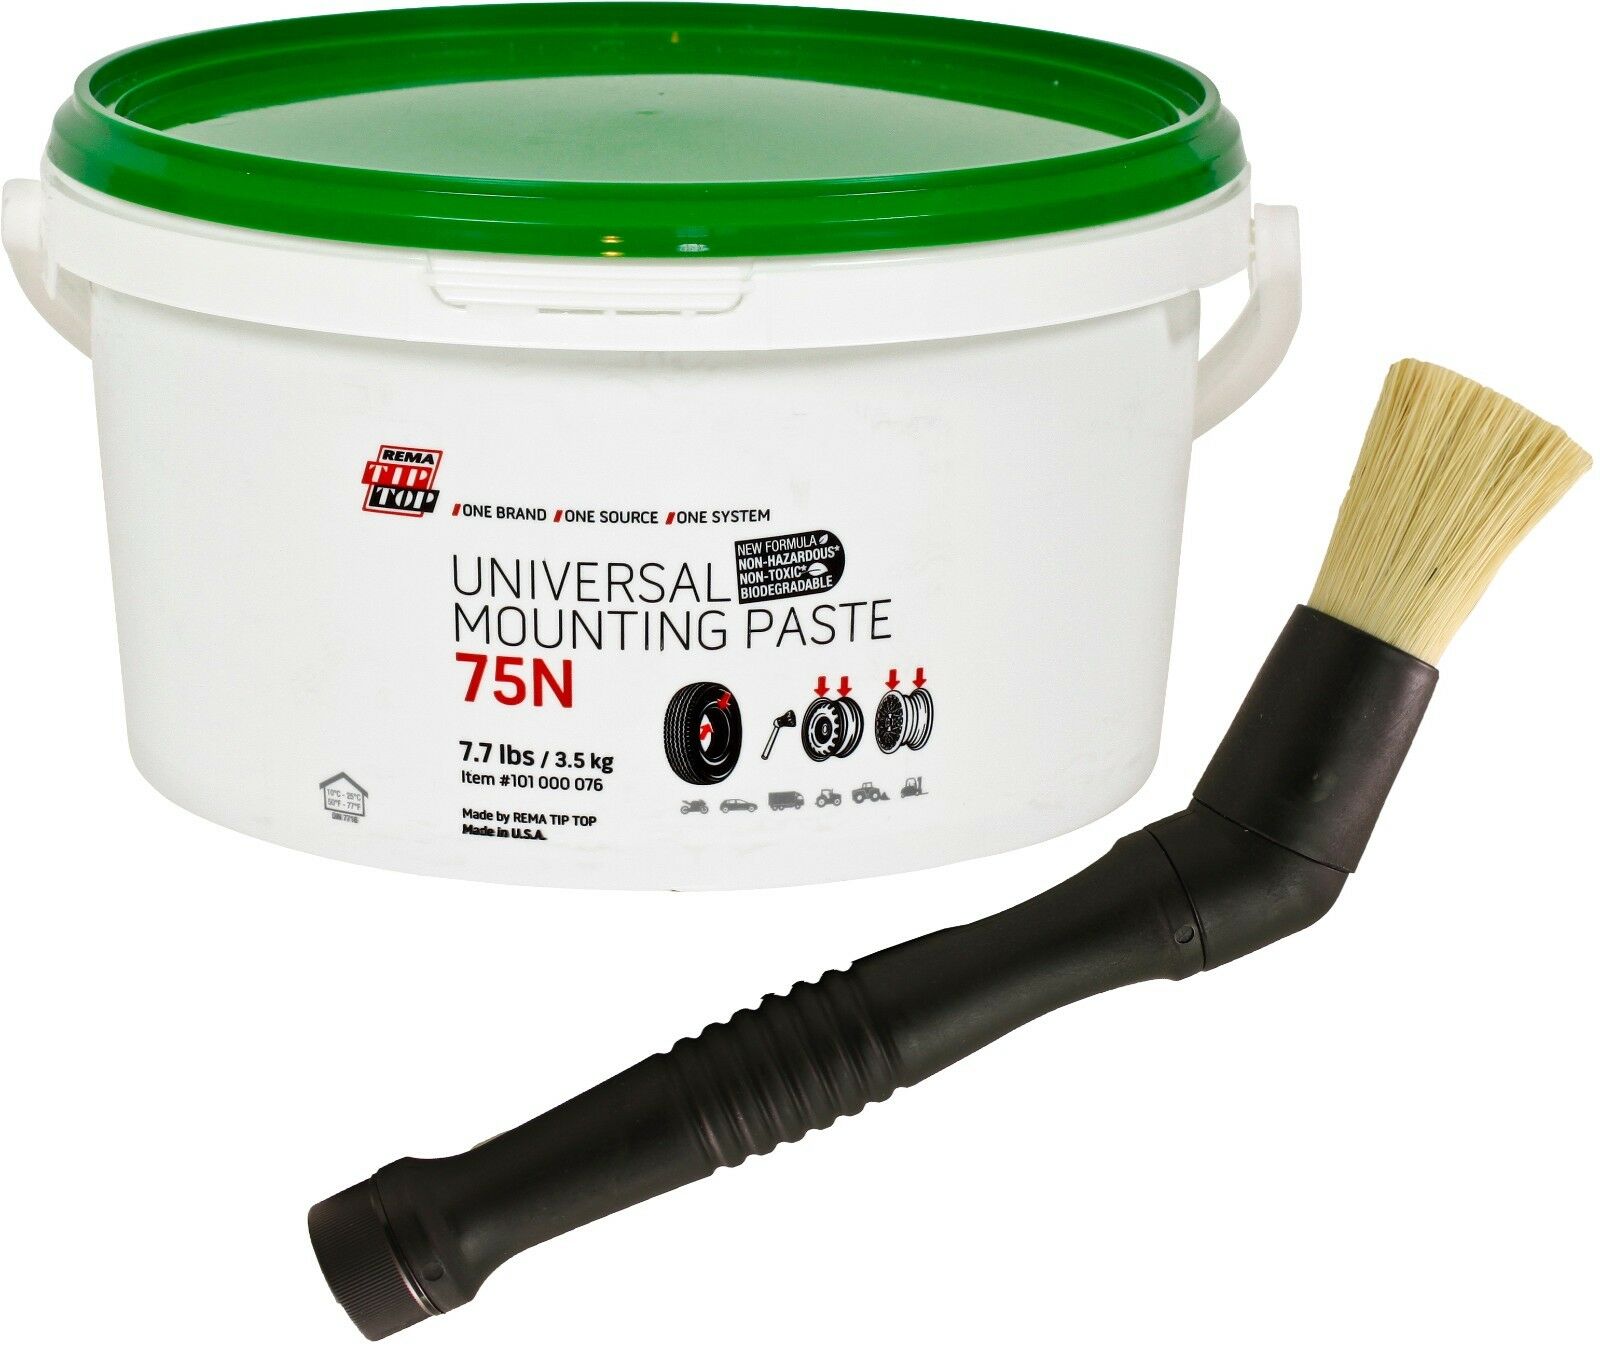 REMA TIP TOP 75N Universal Mounting Paste 7.7lb Pail and Brush Bundle (2 Items)